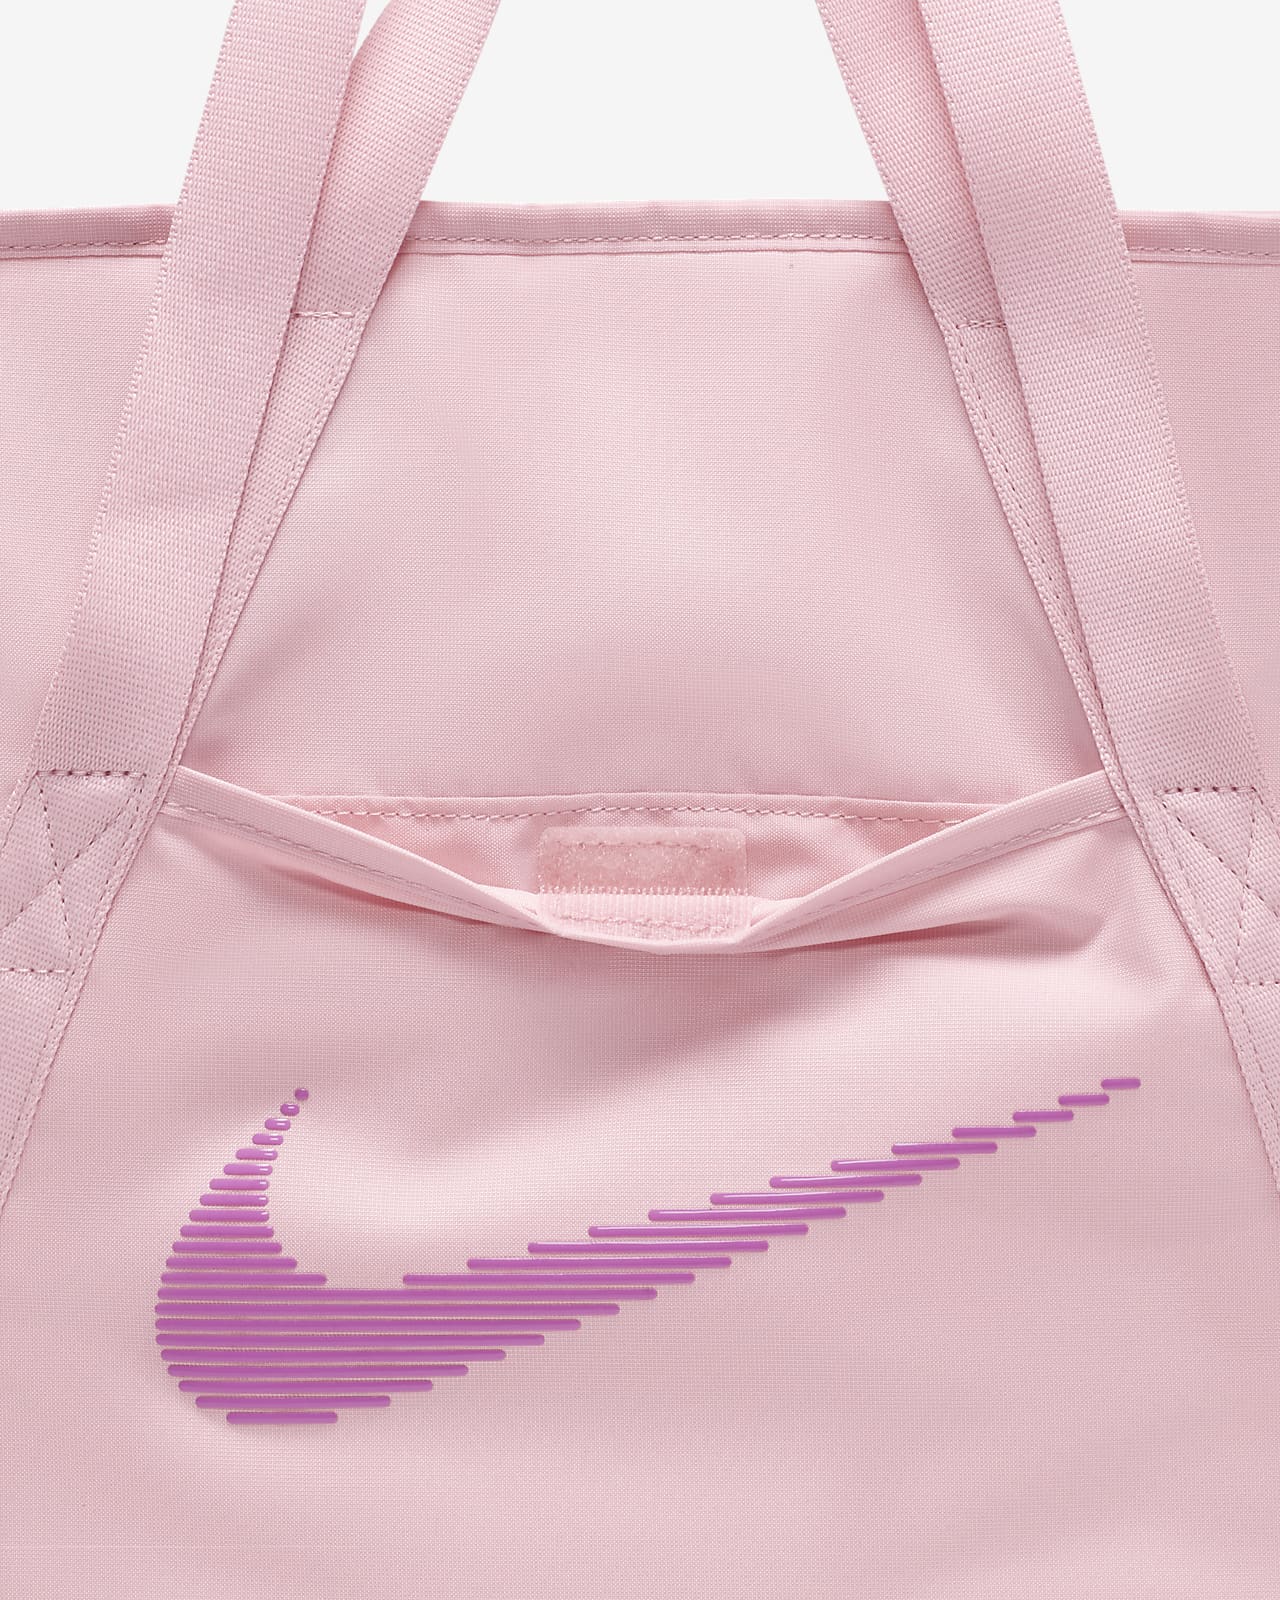 Nike Pink Tote Bags